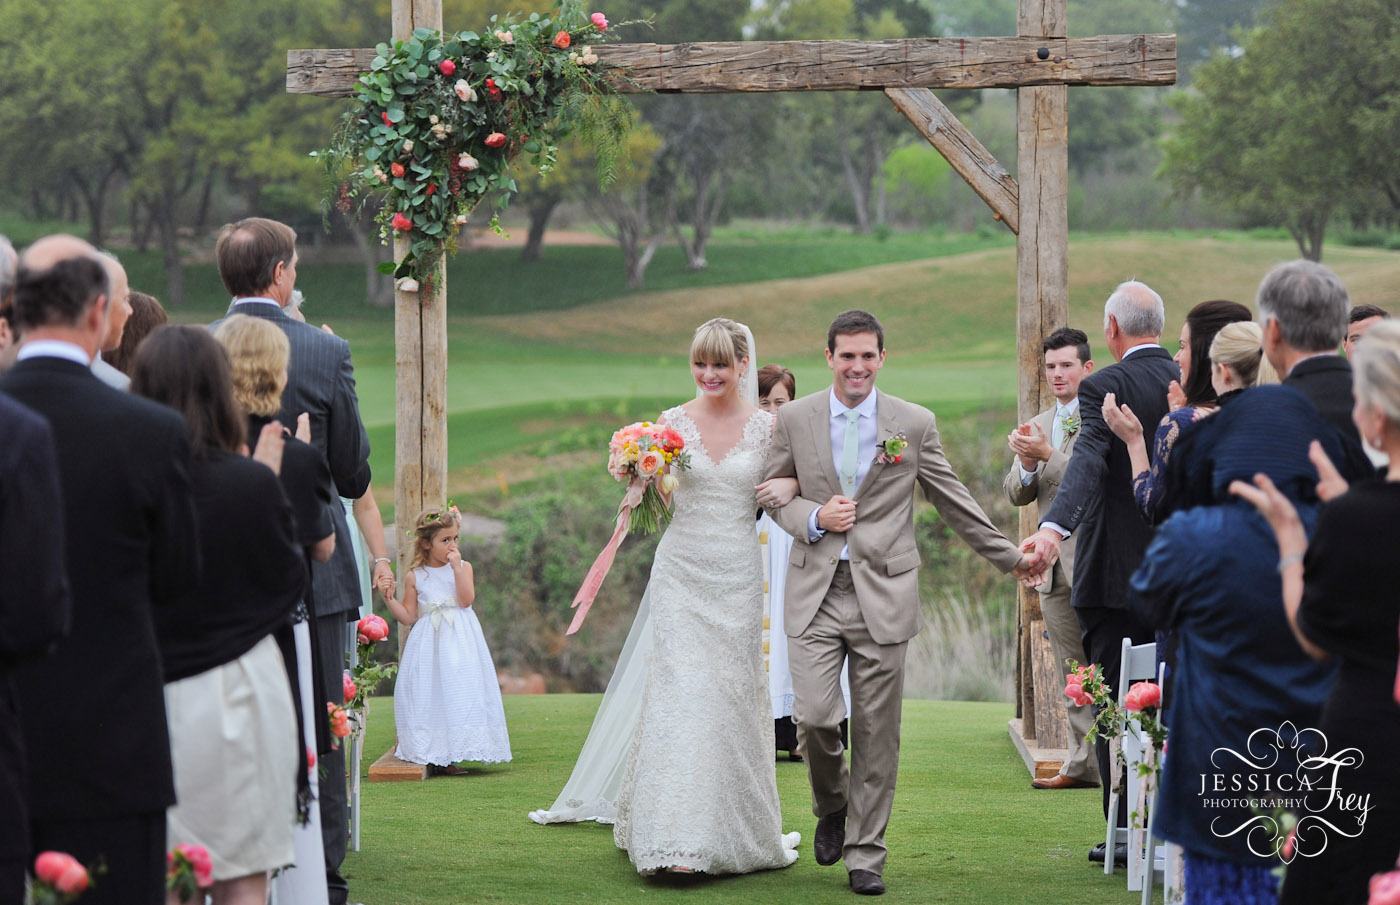 Boot Ranch wedding ceremony, Jessica Frey Photography, golf course wedding, pink teal wedding, lula kate bridesmaid